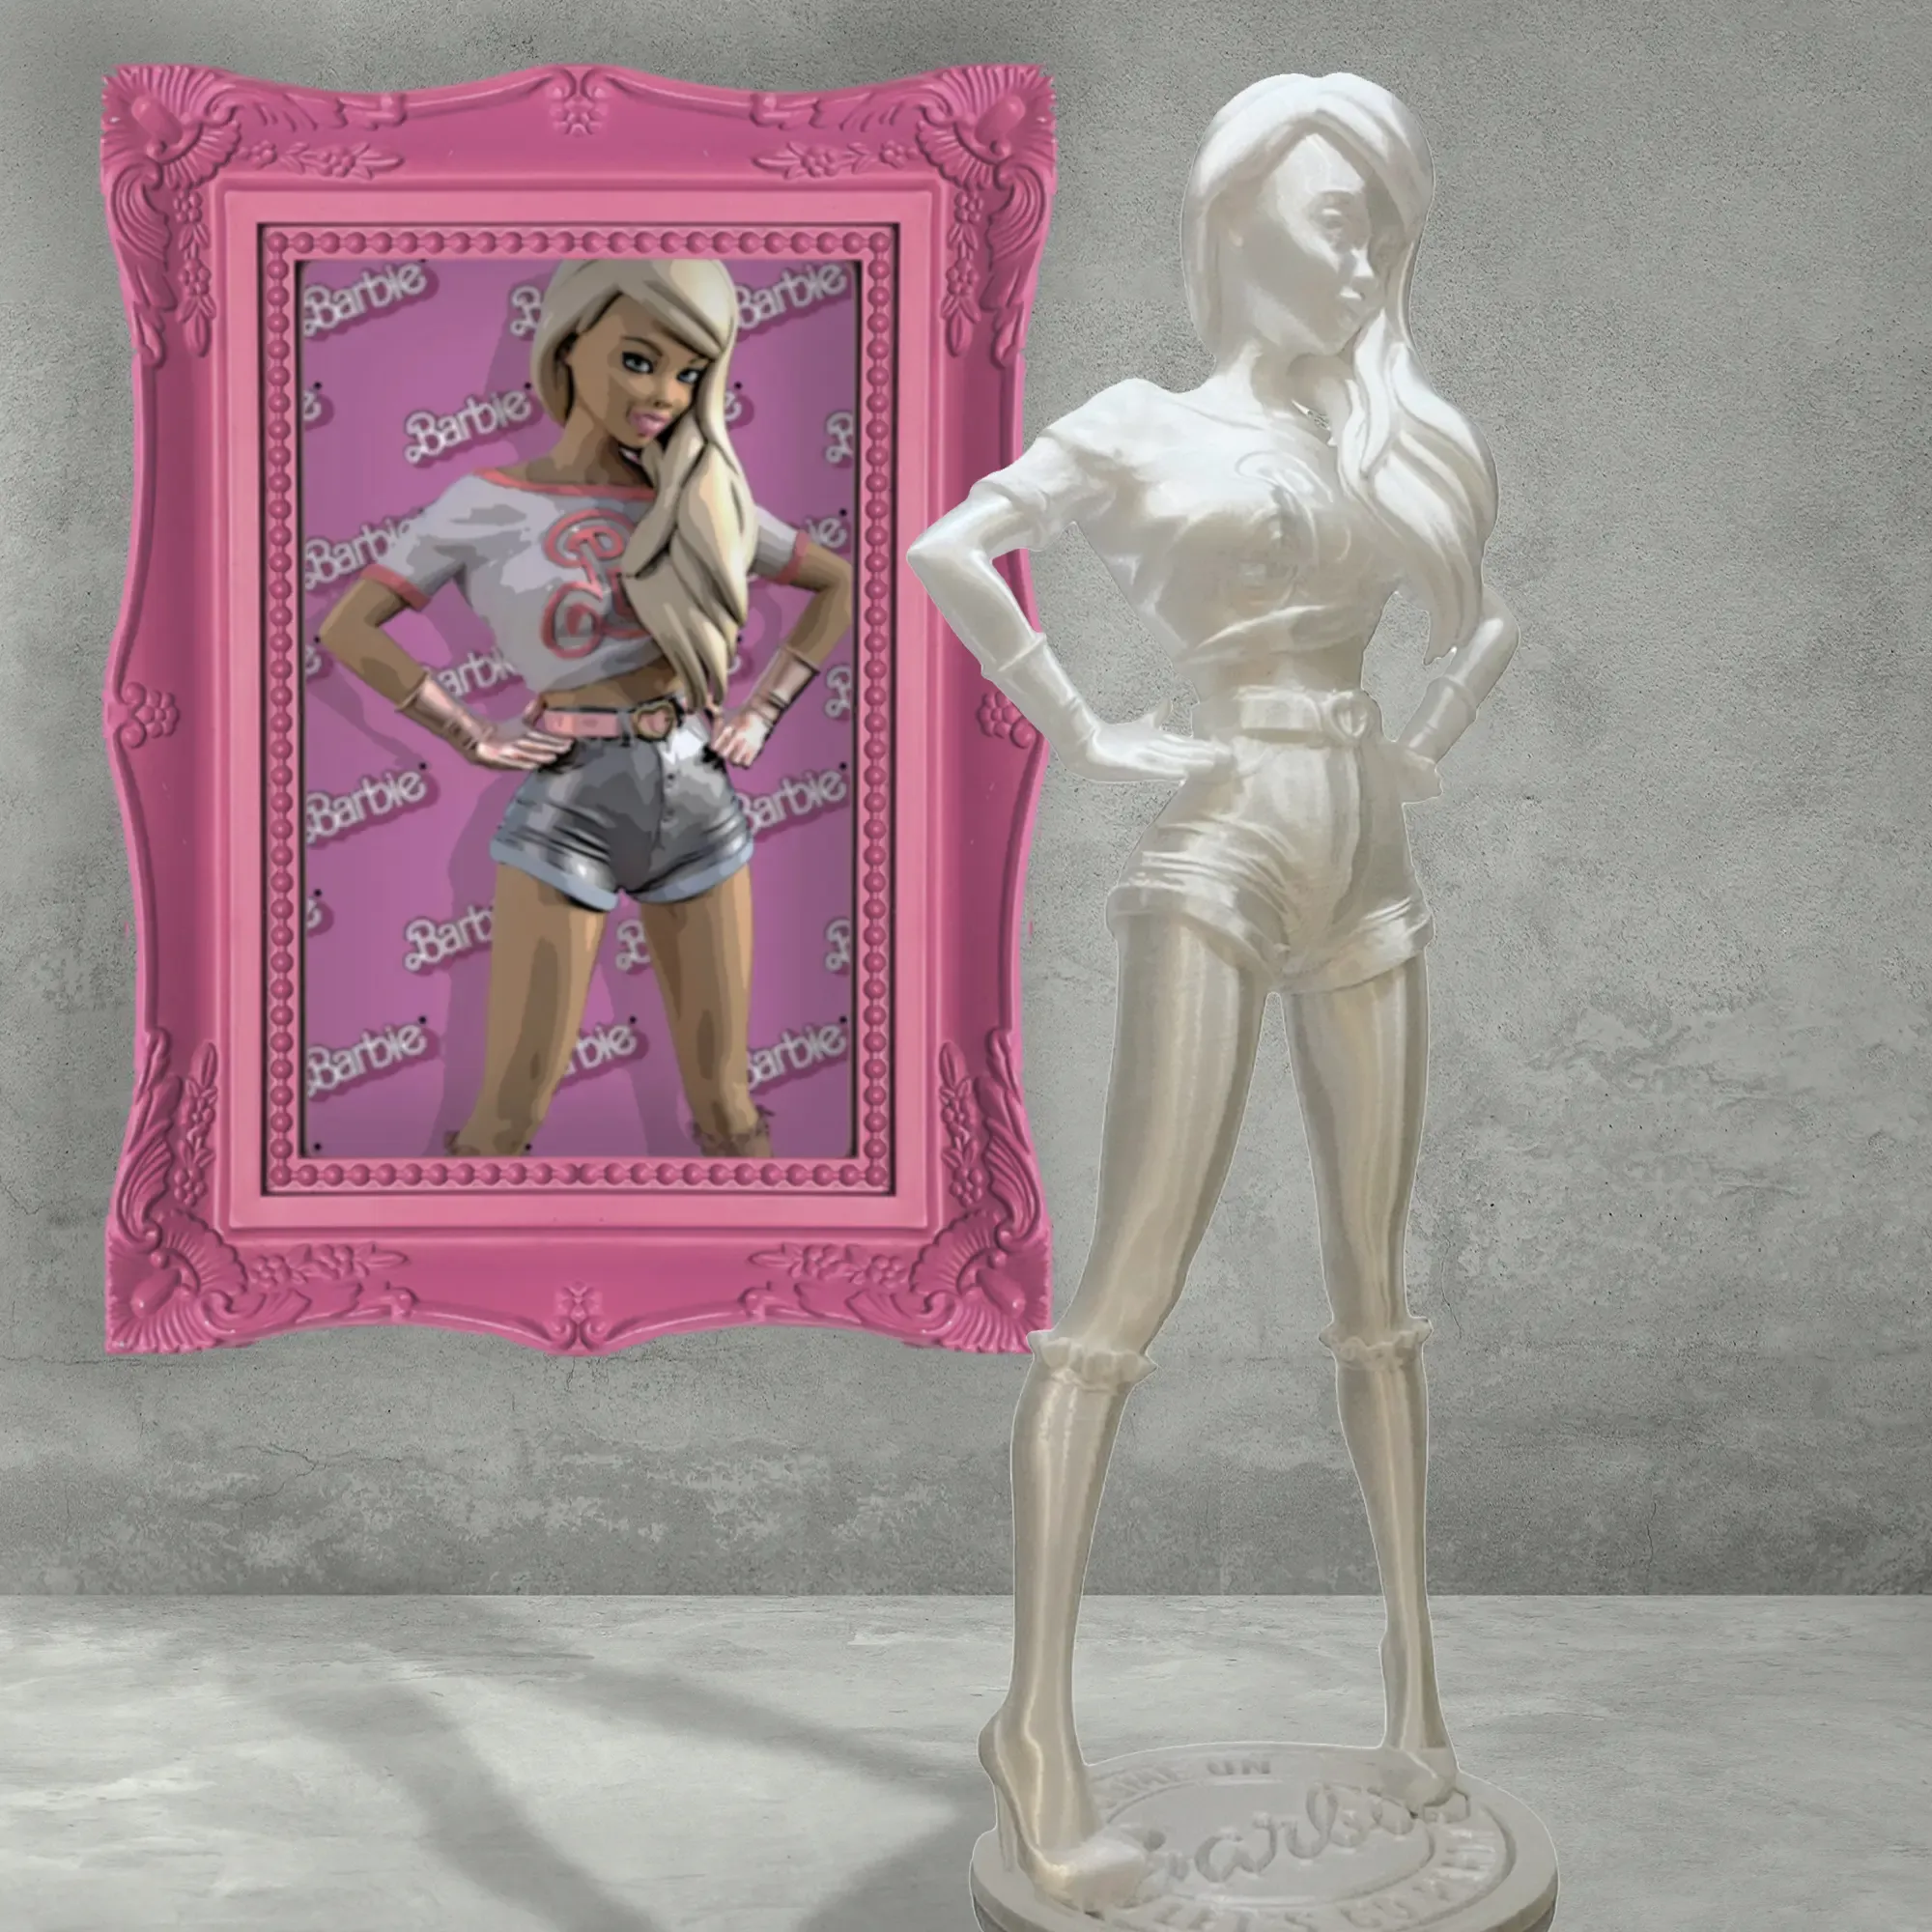 Barbie doll figurine